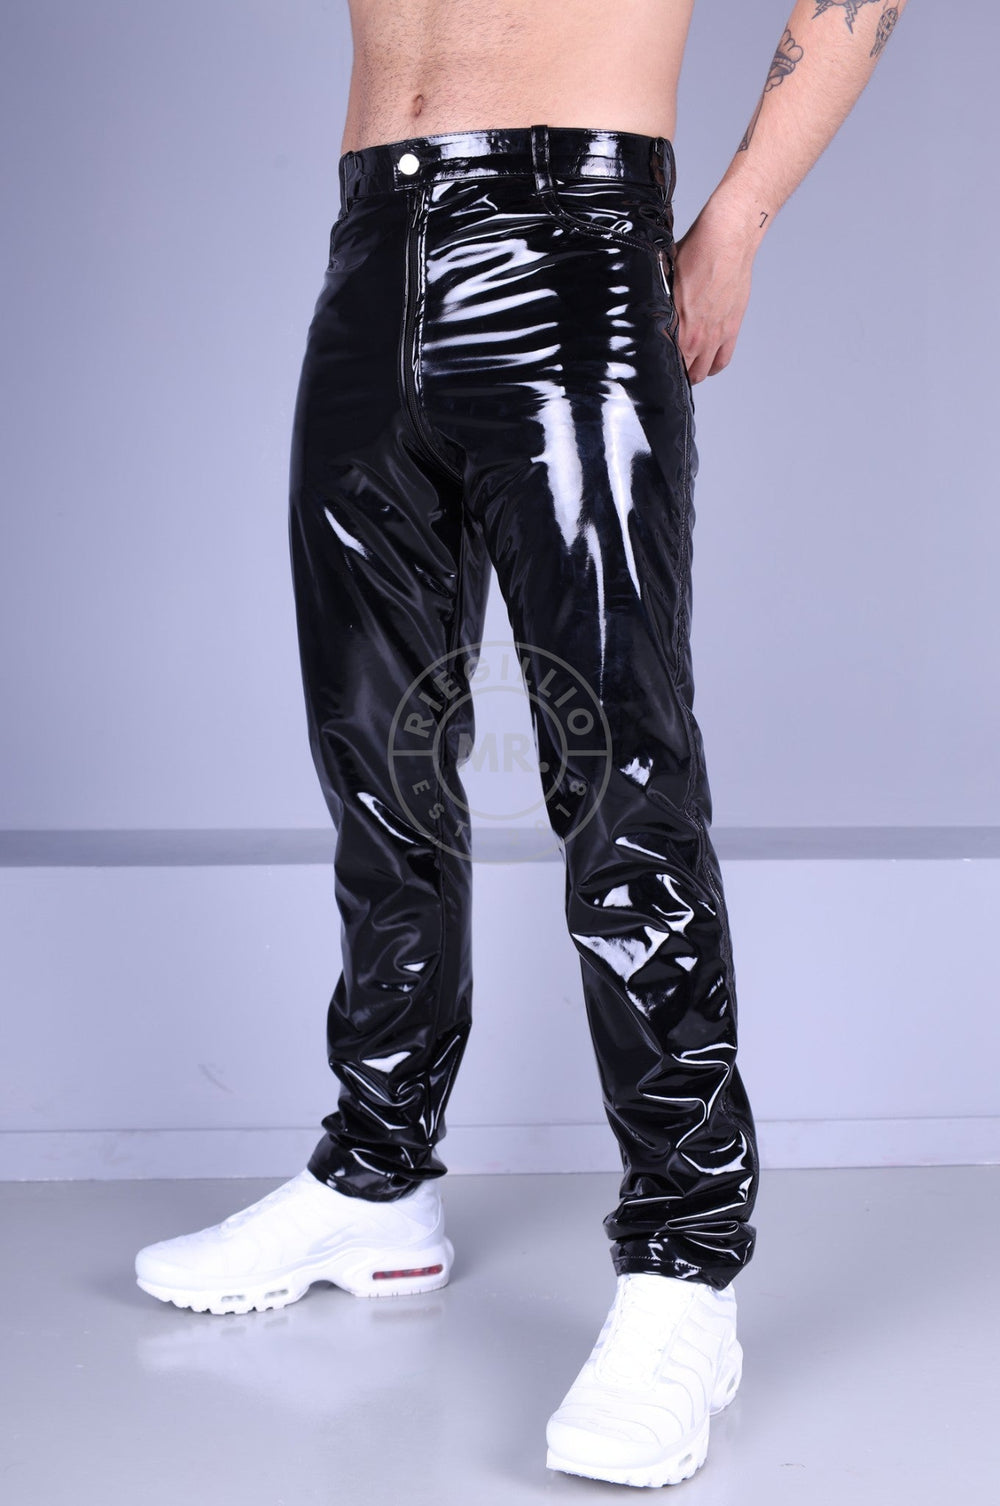 Buy High-quality PVC Pants. Multiple styles! | MR. Riegillio